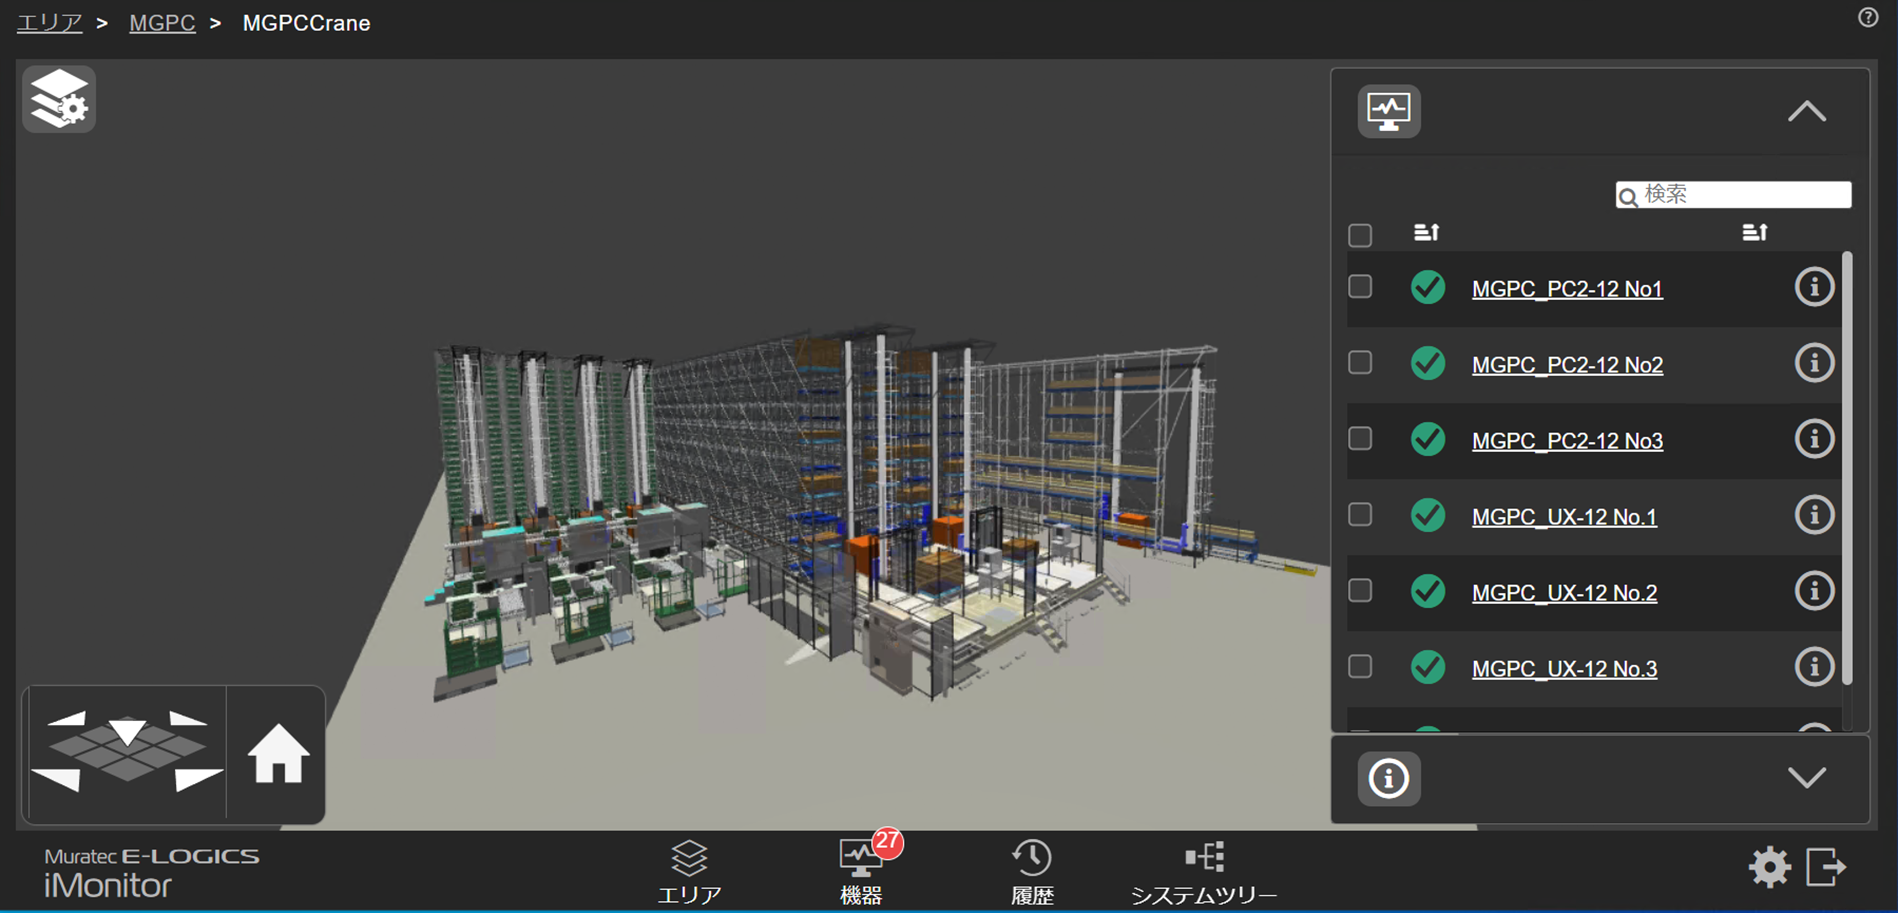 3D facility management system